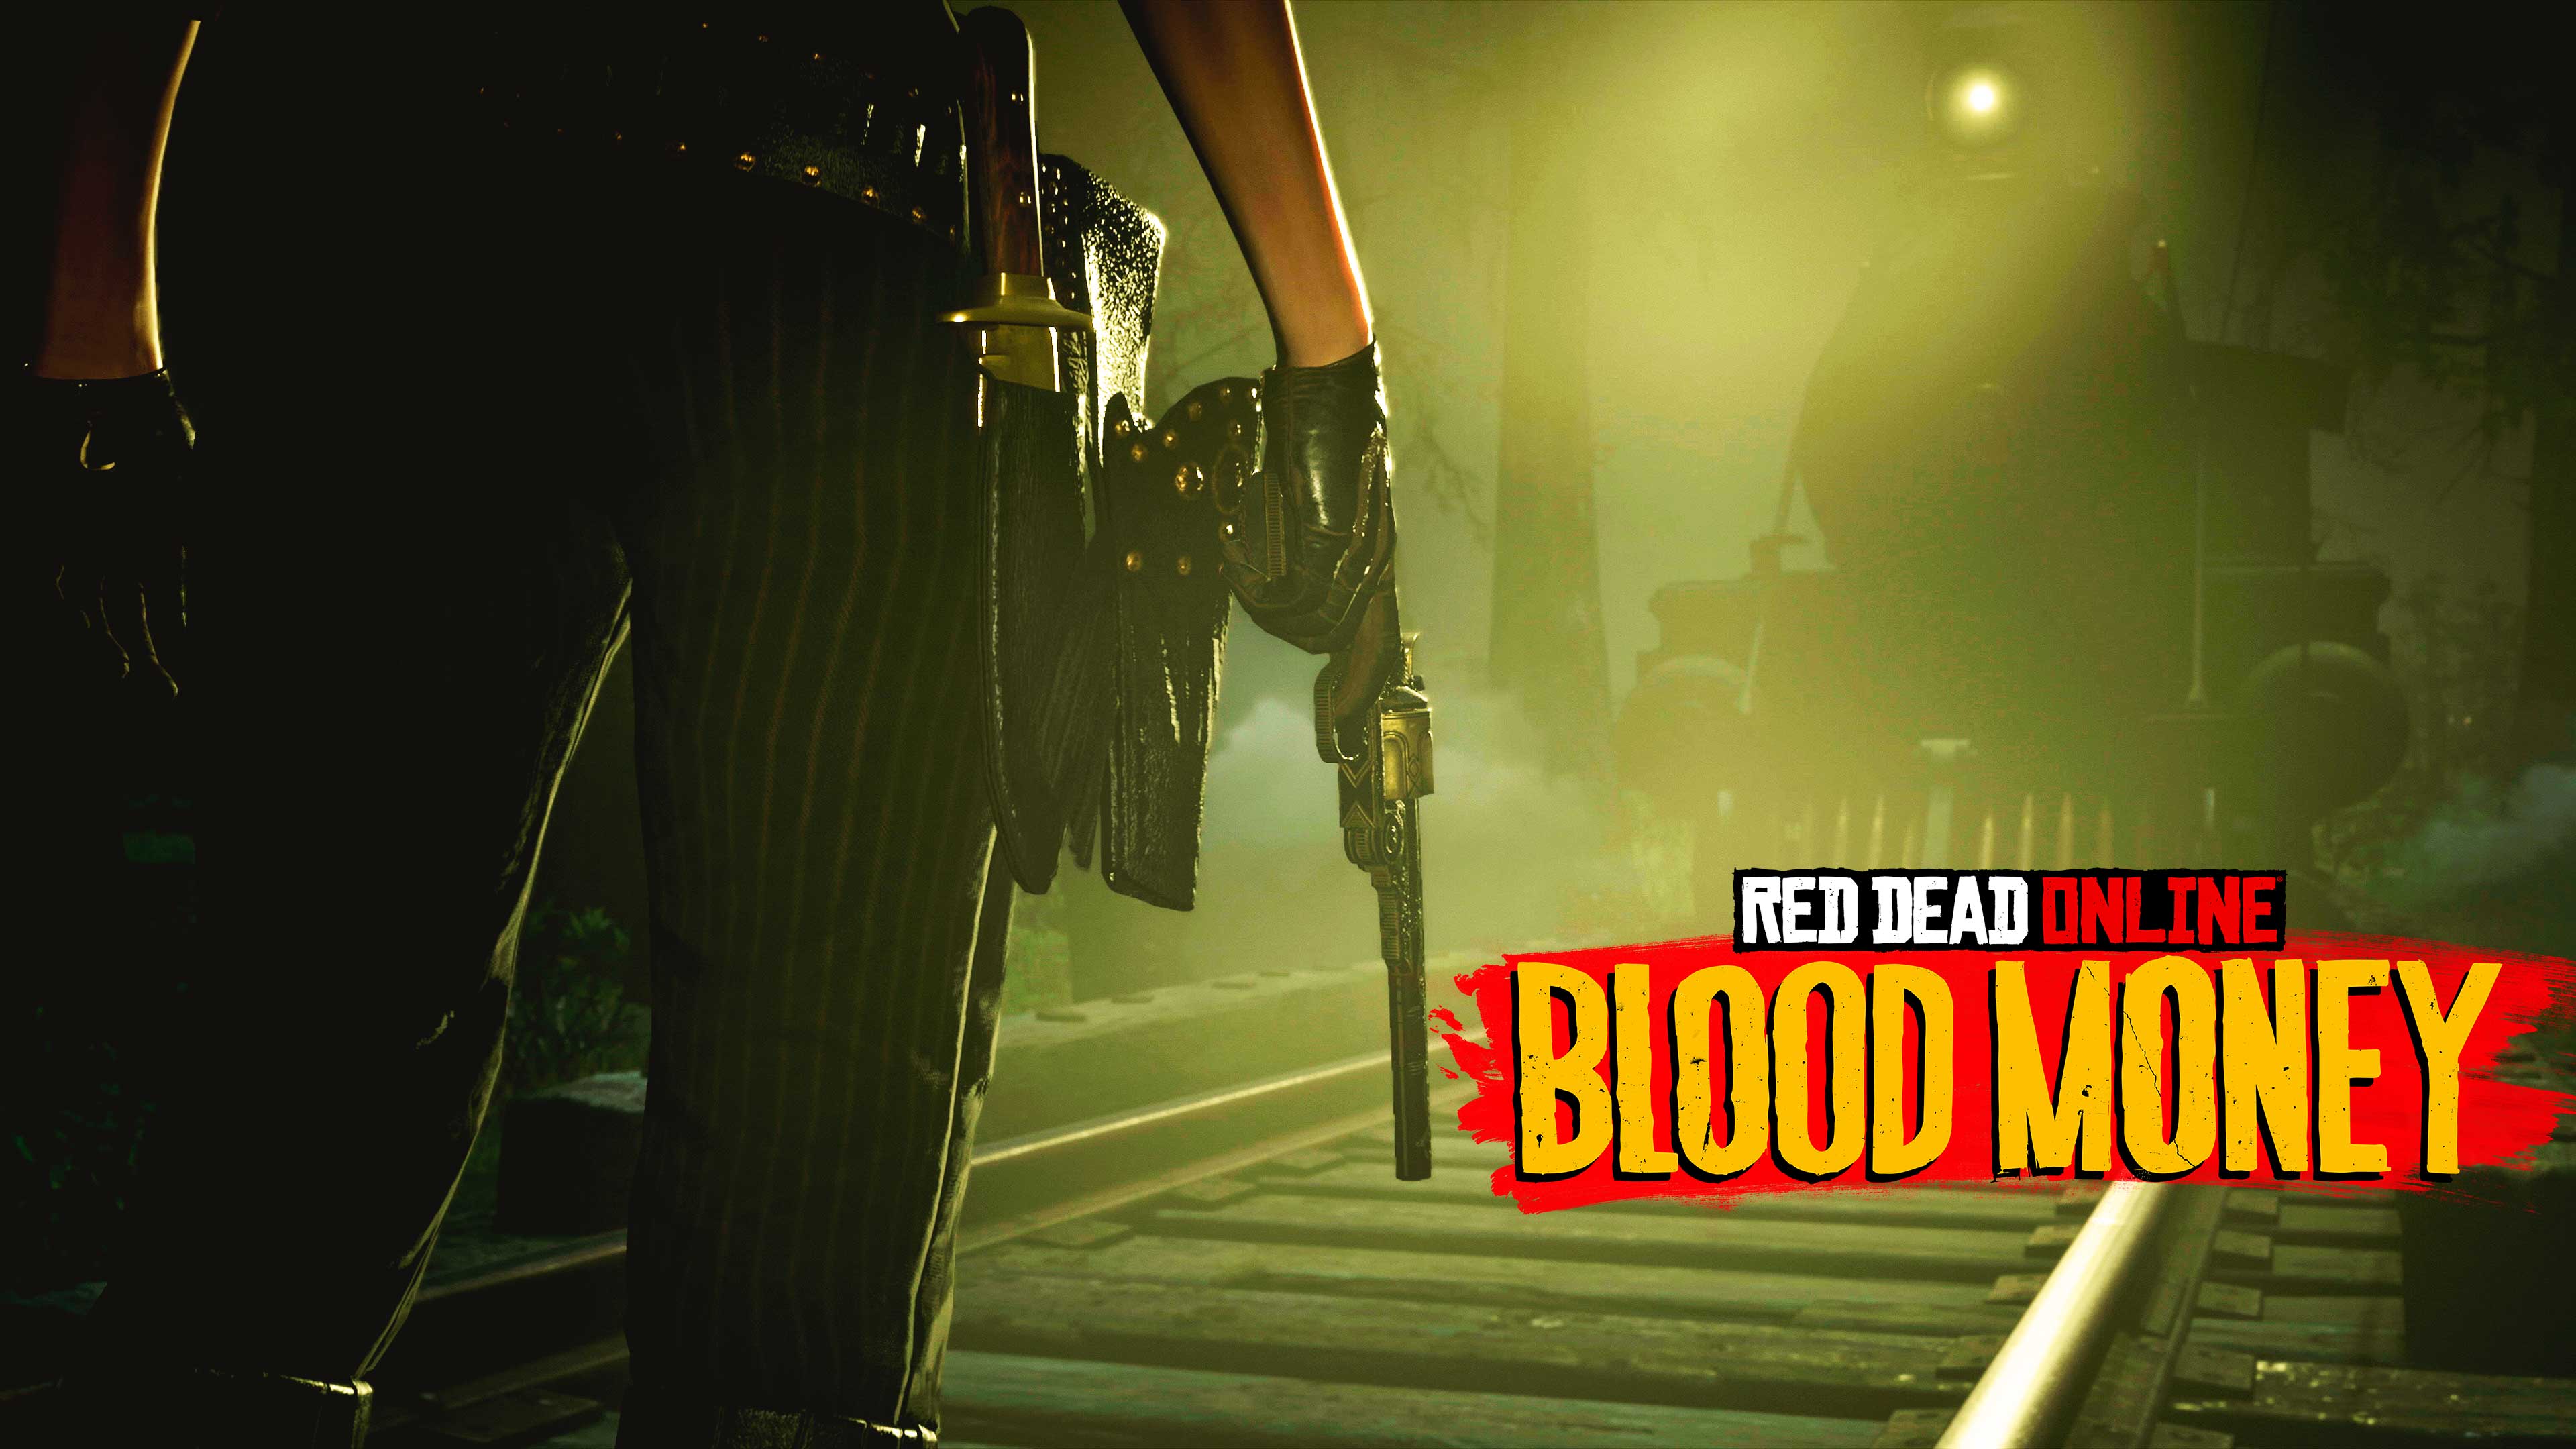 Red Dead Redemption 2: como ficar rico